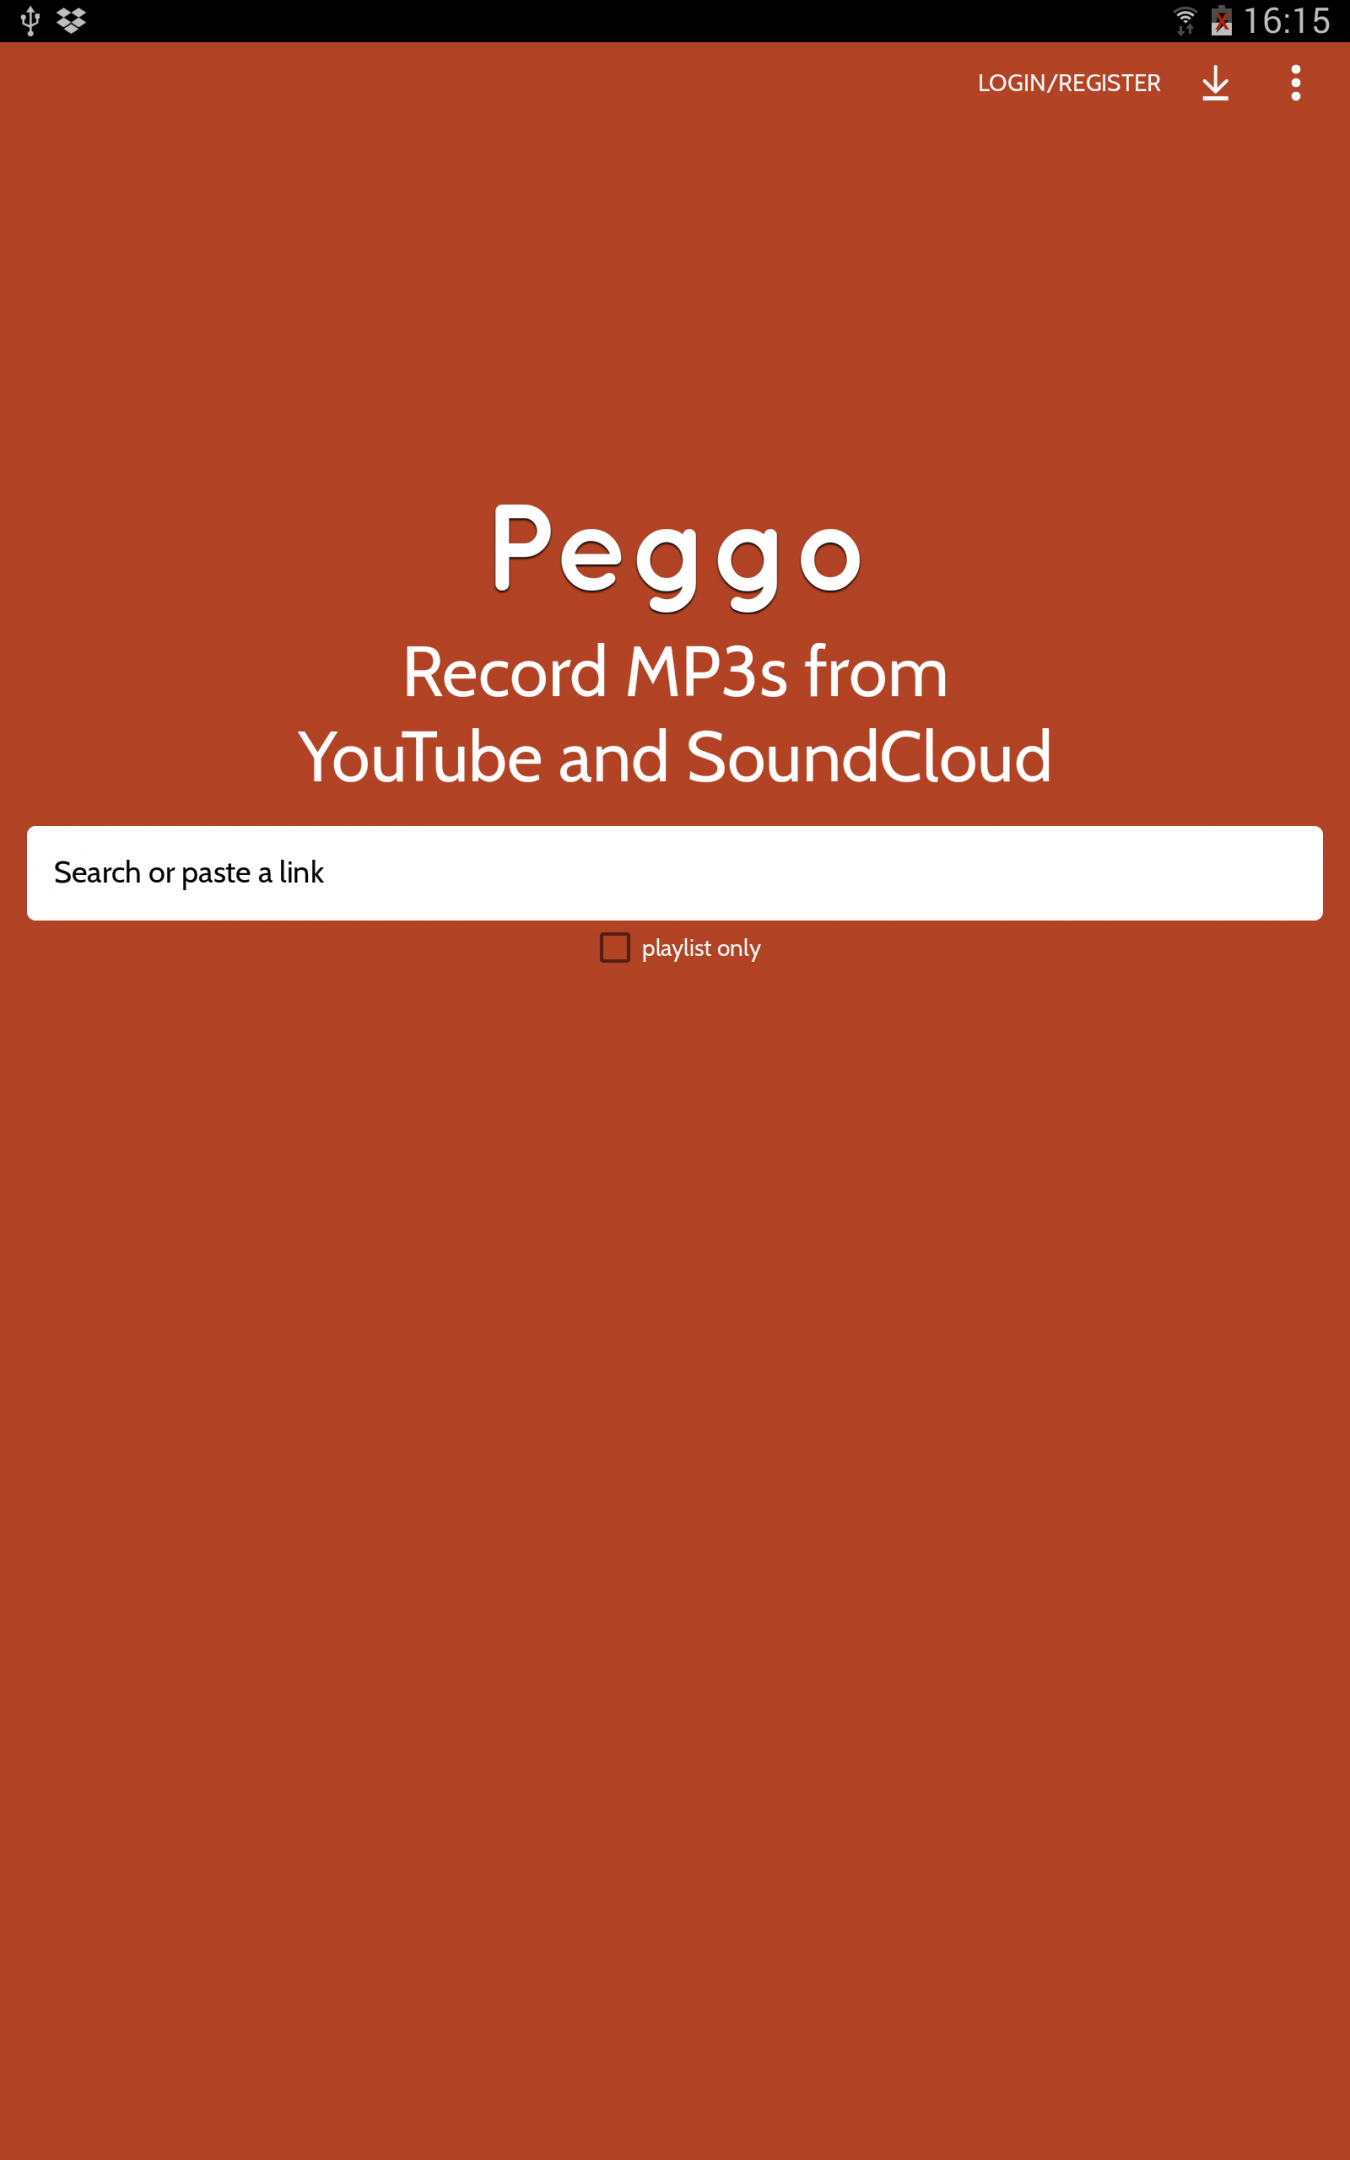 download peggo soundcloud